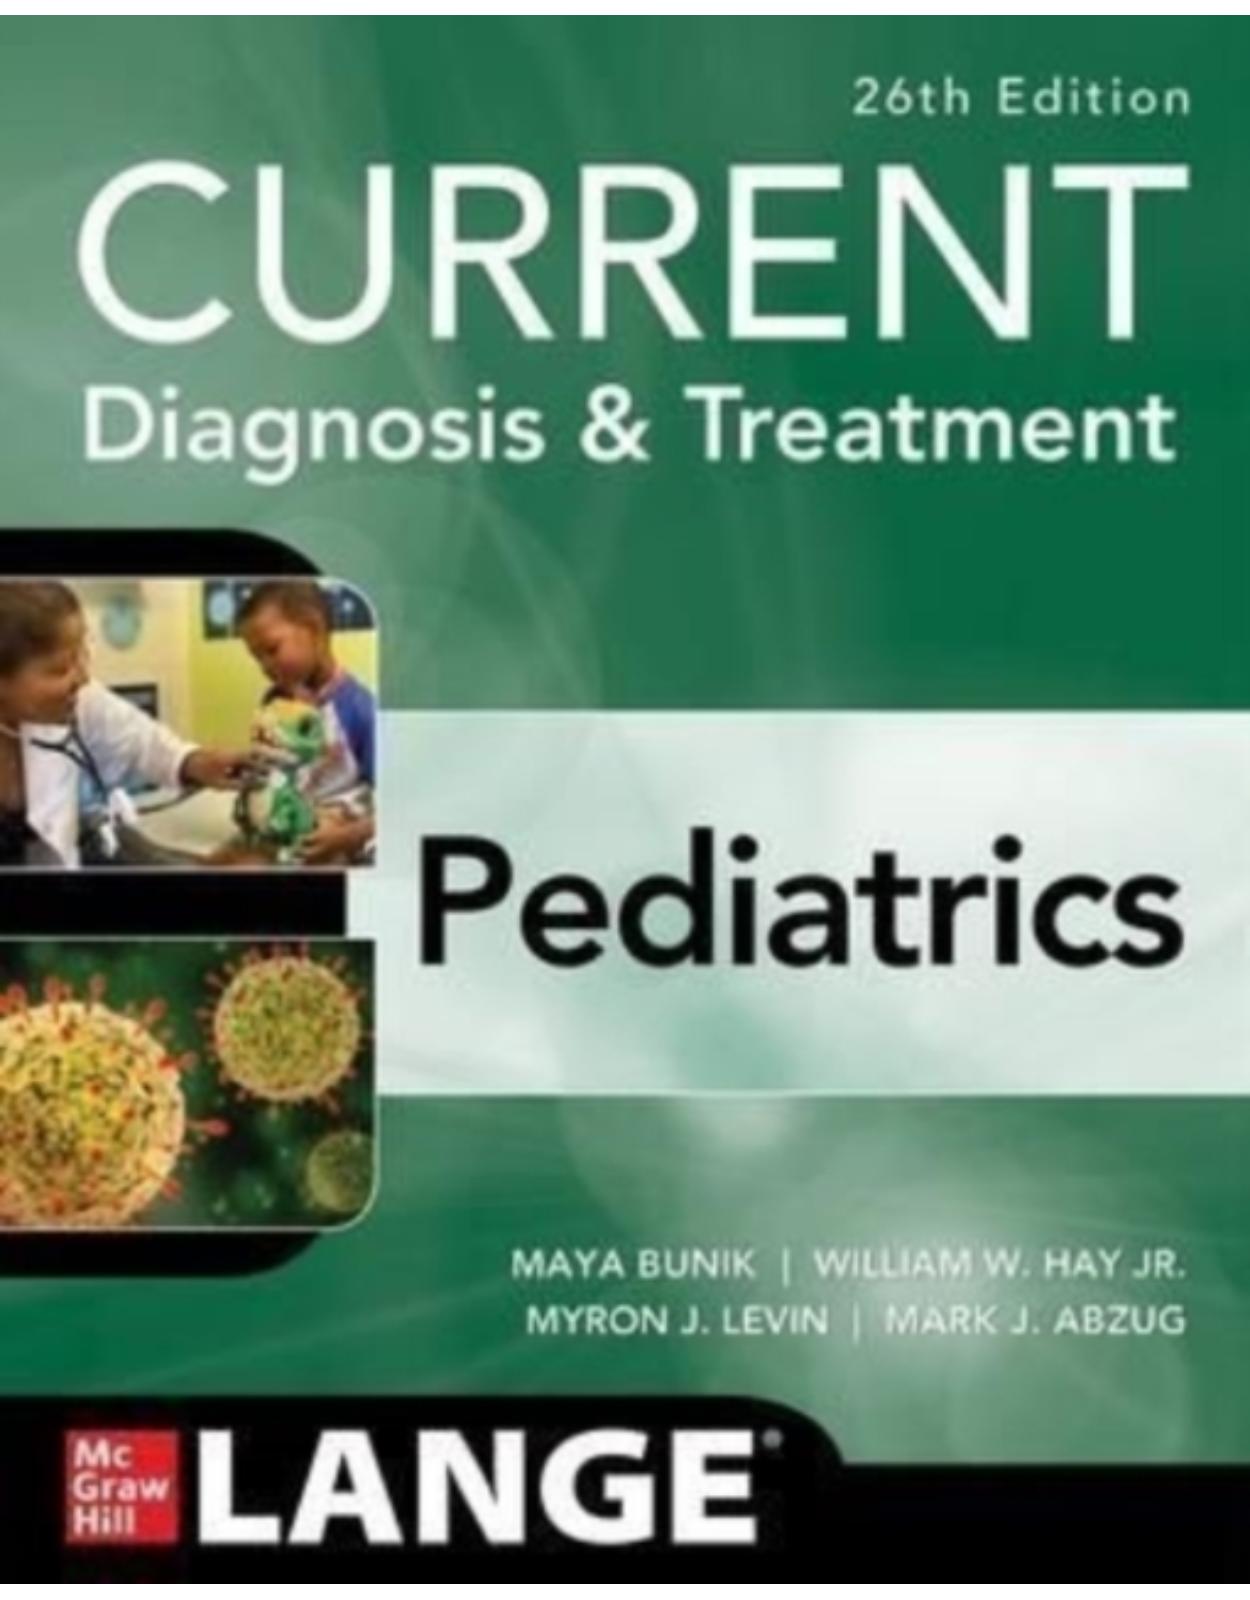 CURRENT Diagnosis & Treatment Pediatrics, Twenty-Sixth Edition